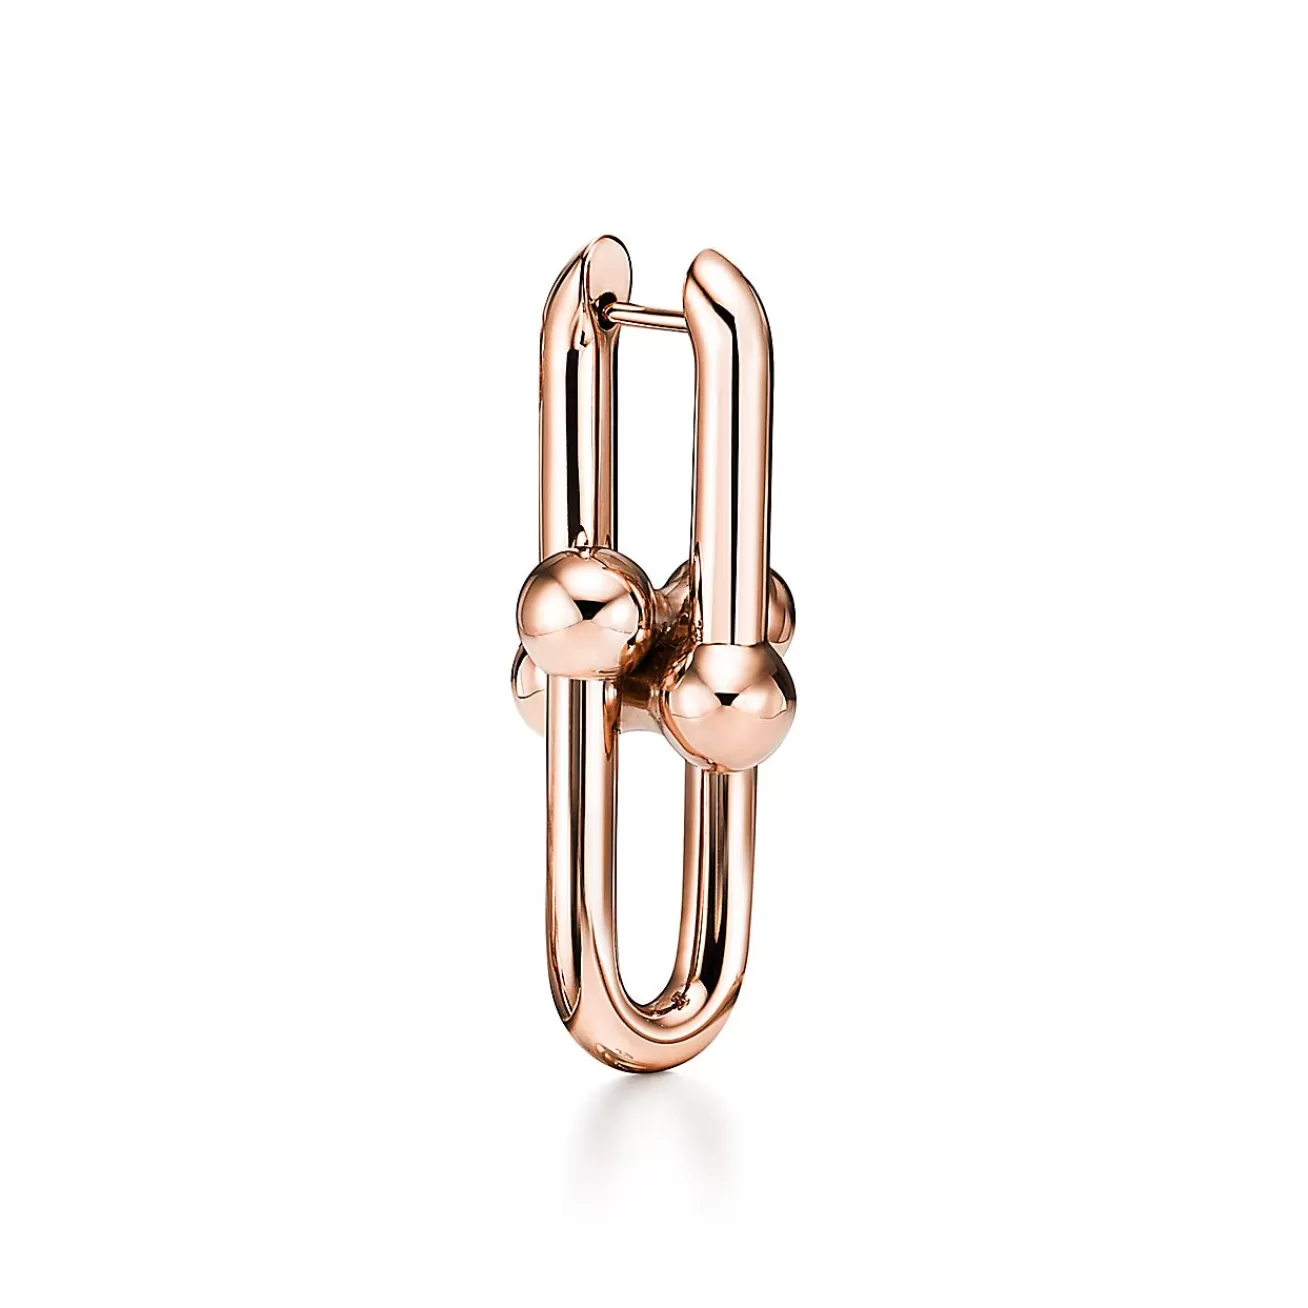 Tiffany & Co. Tiffany HardWear Large Link Earrings in Rose Gold | ^ Earrings | Gifts for Her